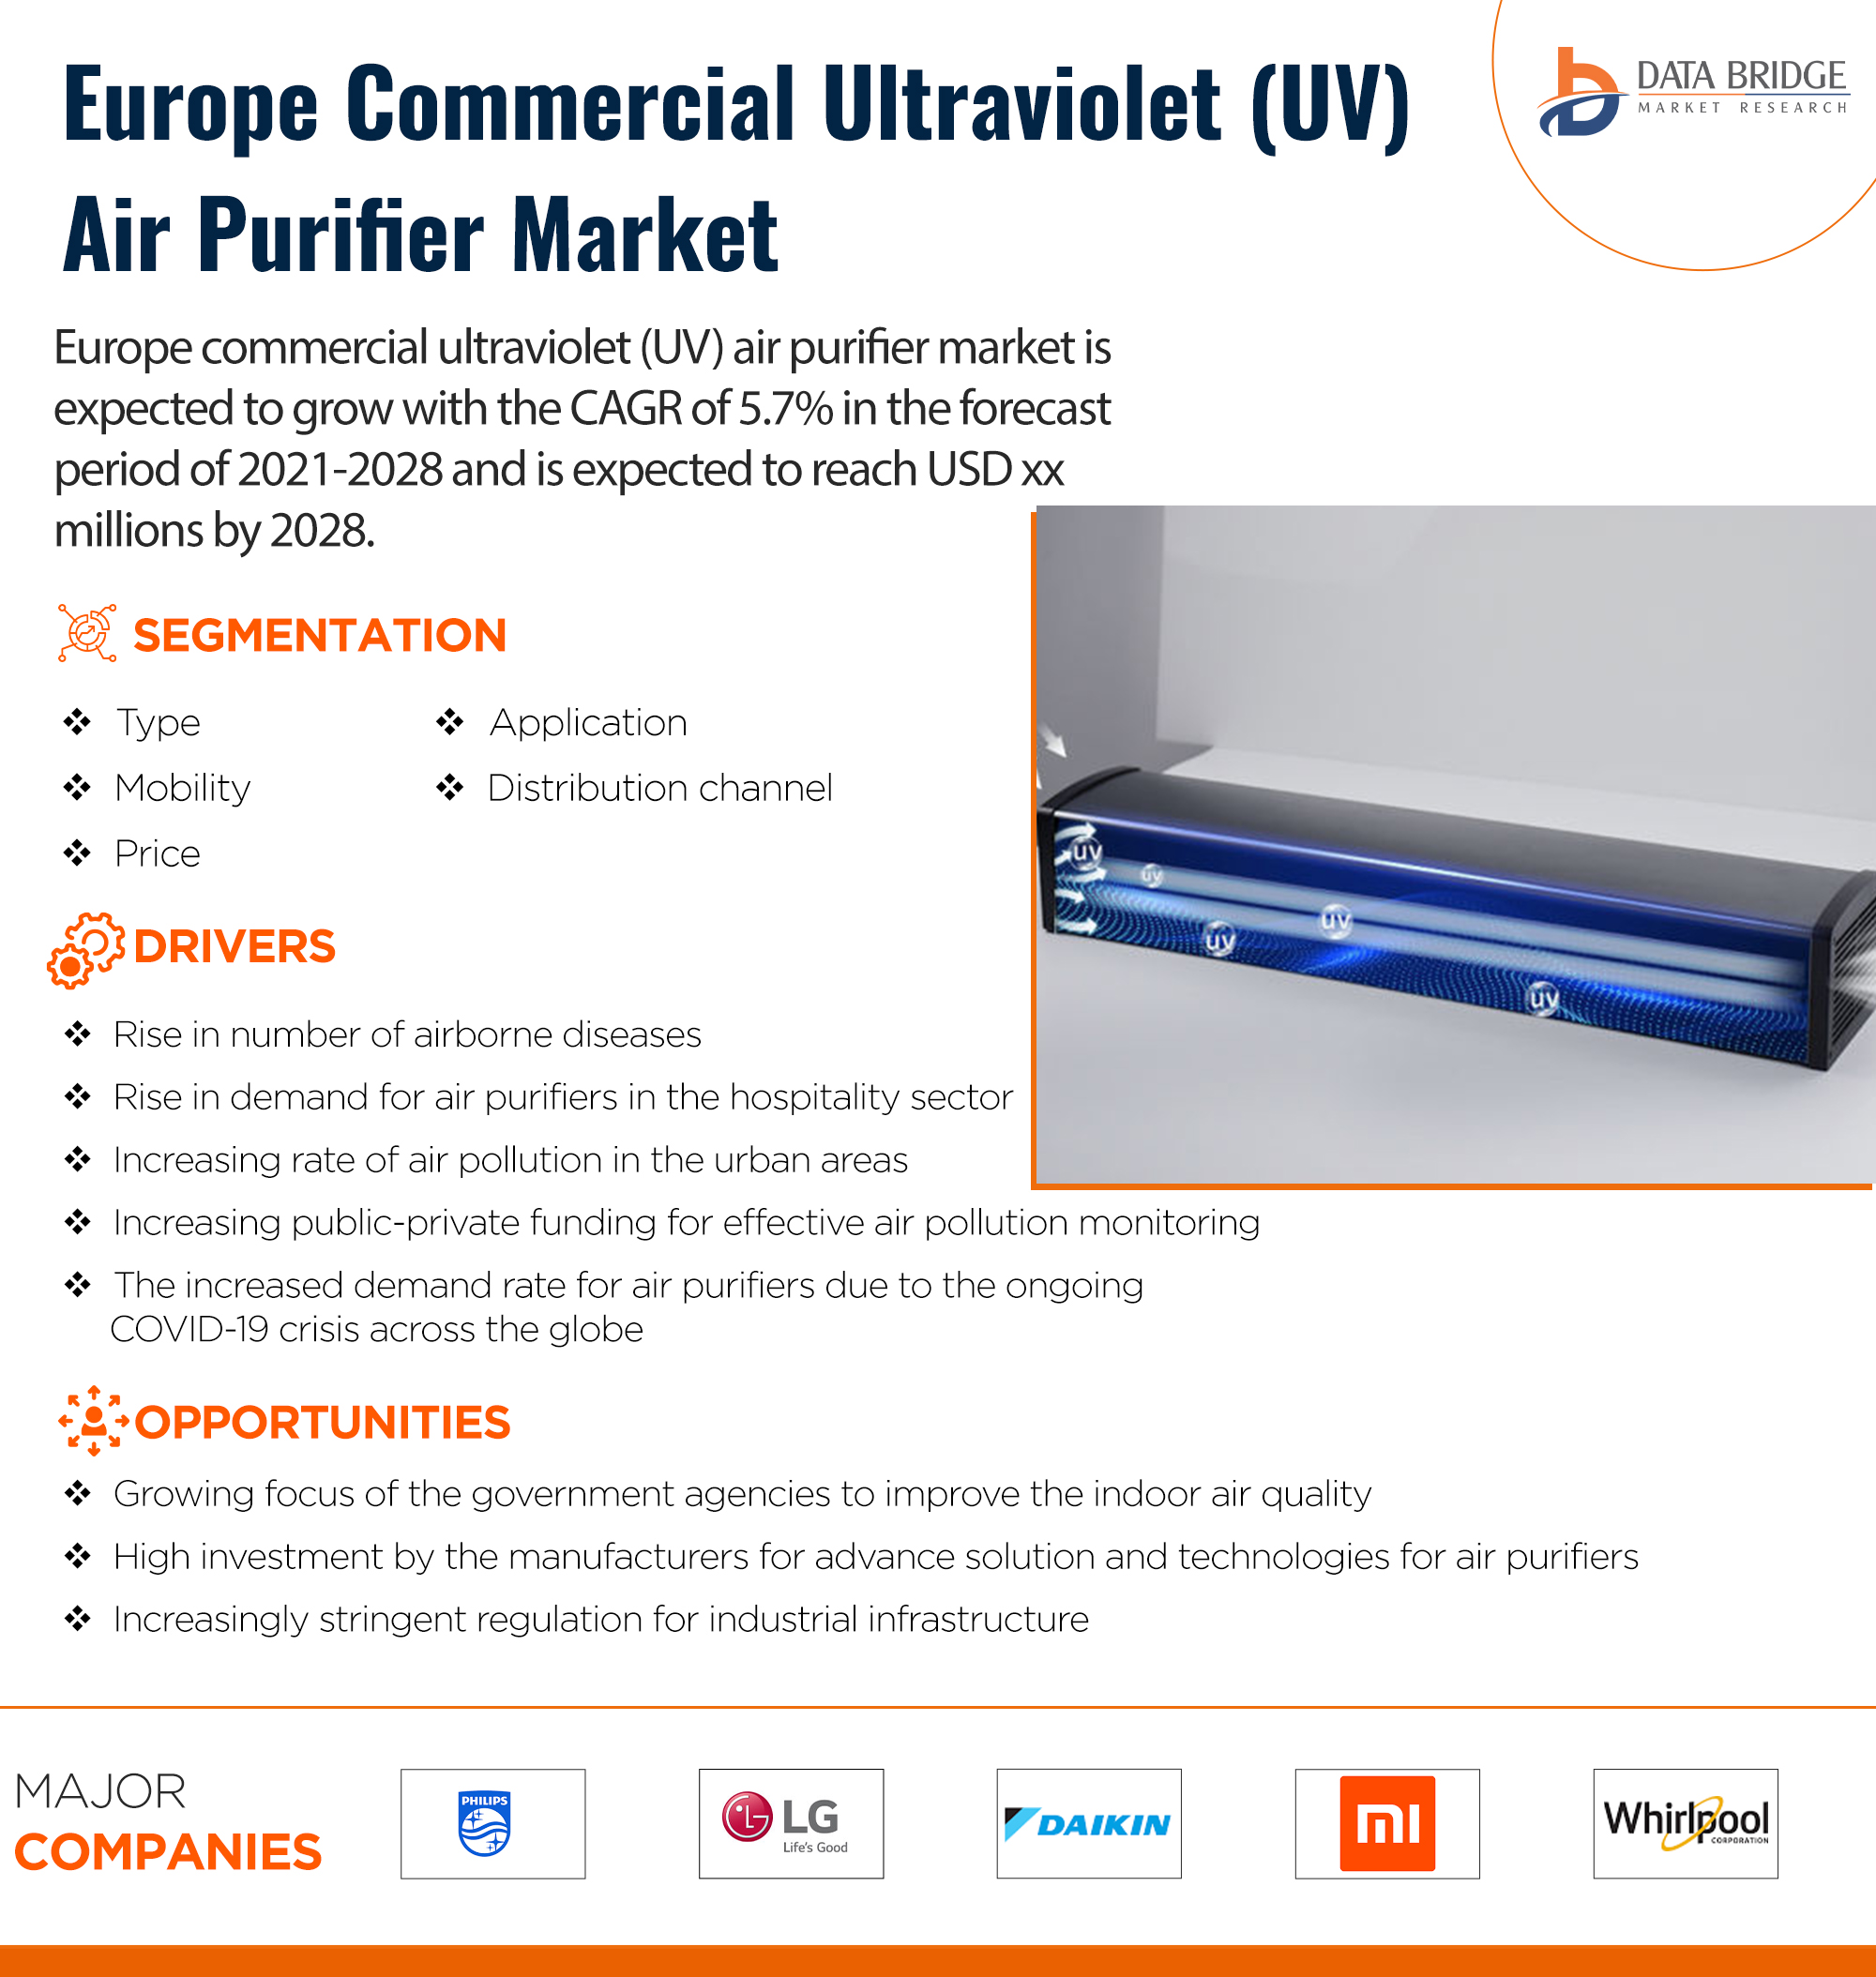 Europe Commercial Ultraviolet (UV) Air Purifier Market